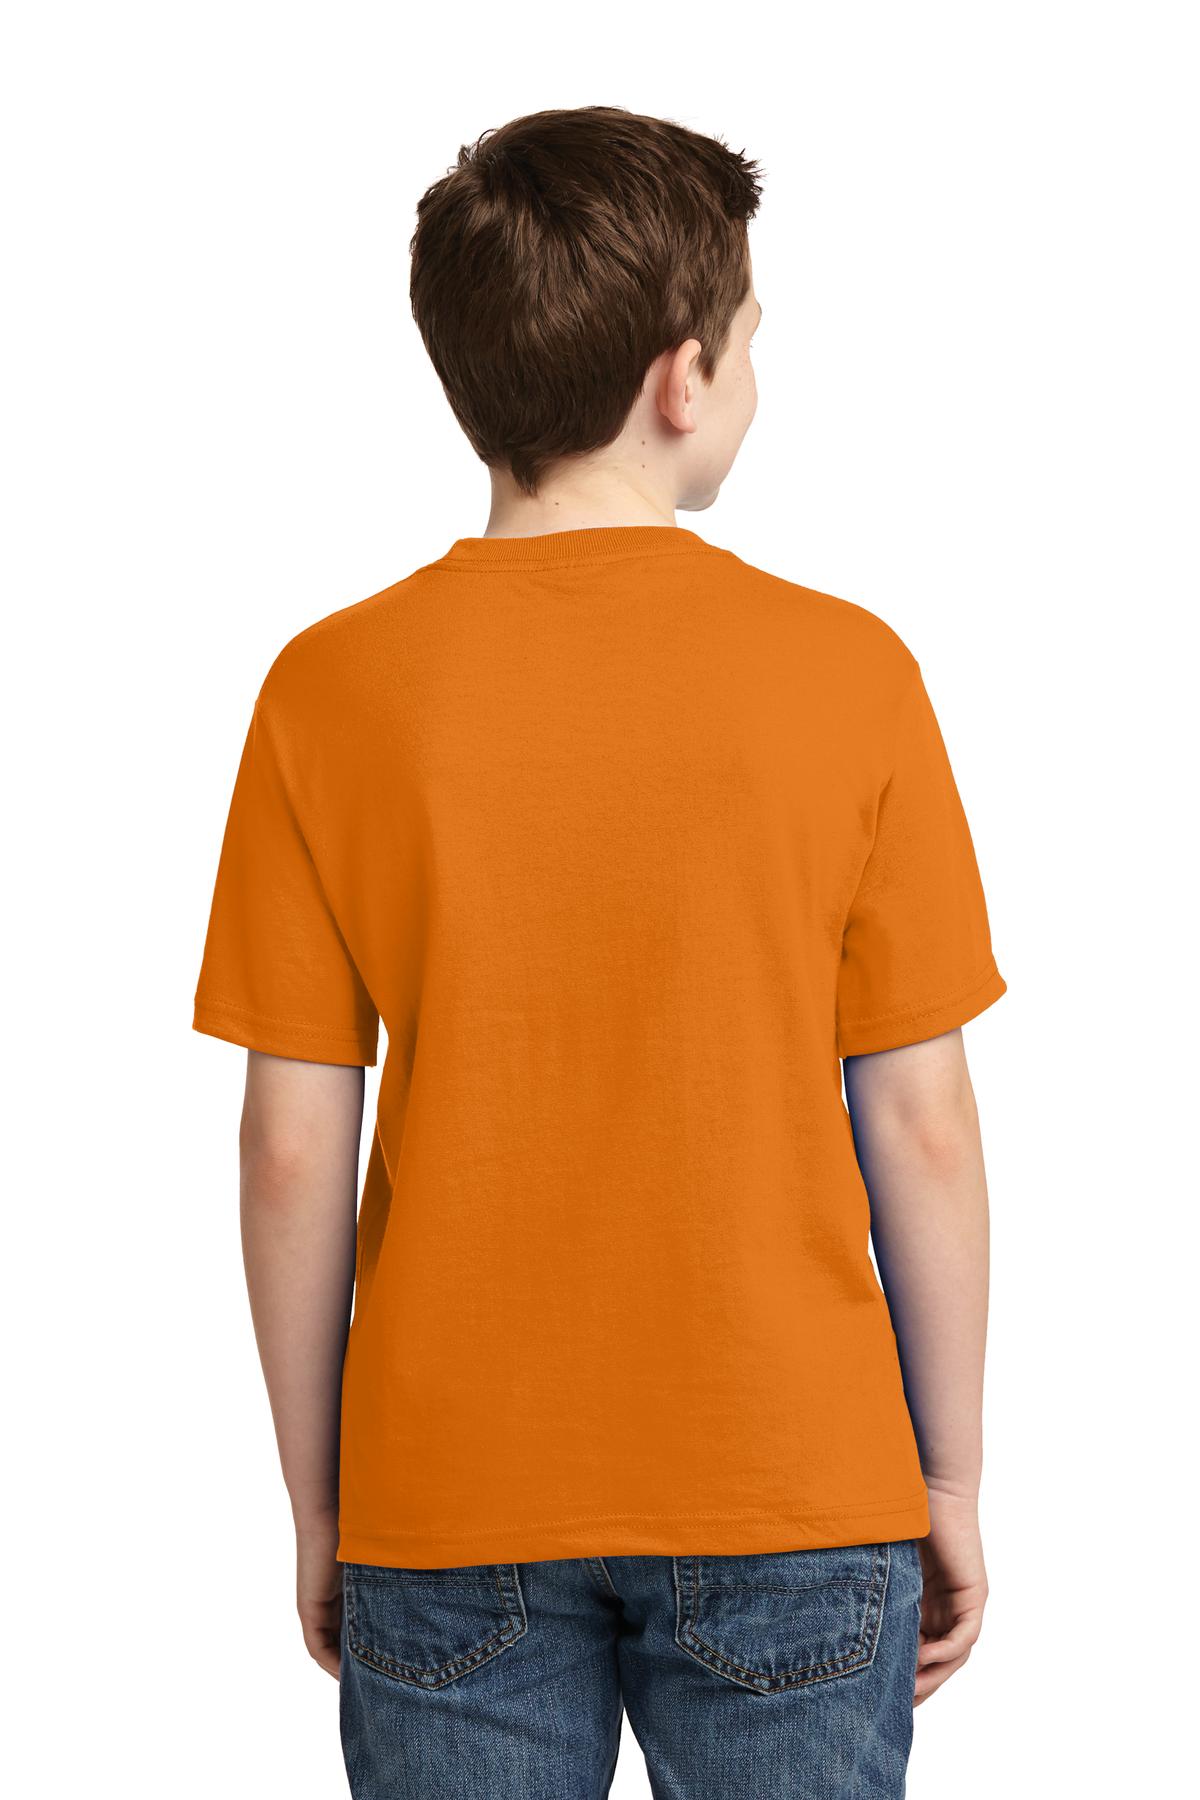 JERZEES® - Youth Dri-Power® 50/50 Cotton/Poly T-Shirt. 29B [Tennessee Orange] - DFW Impression